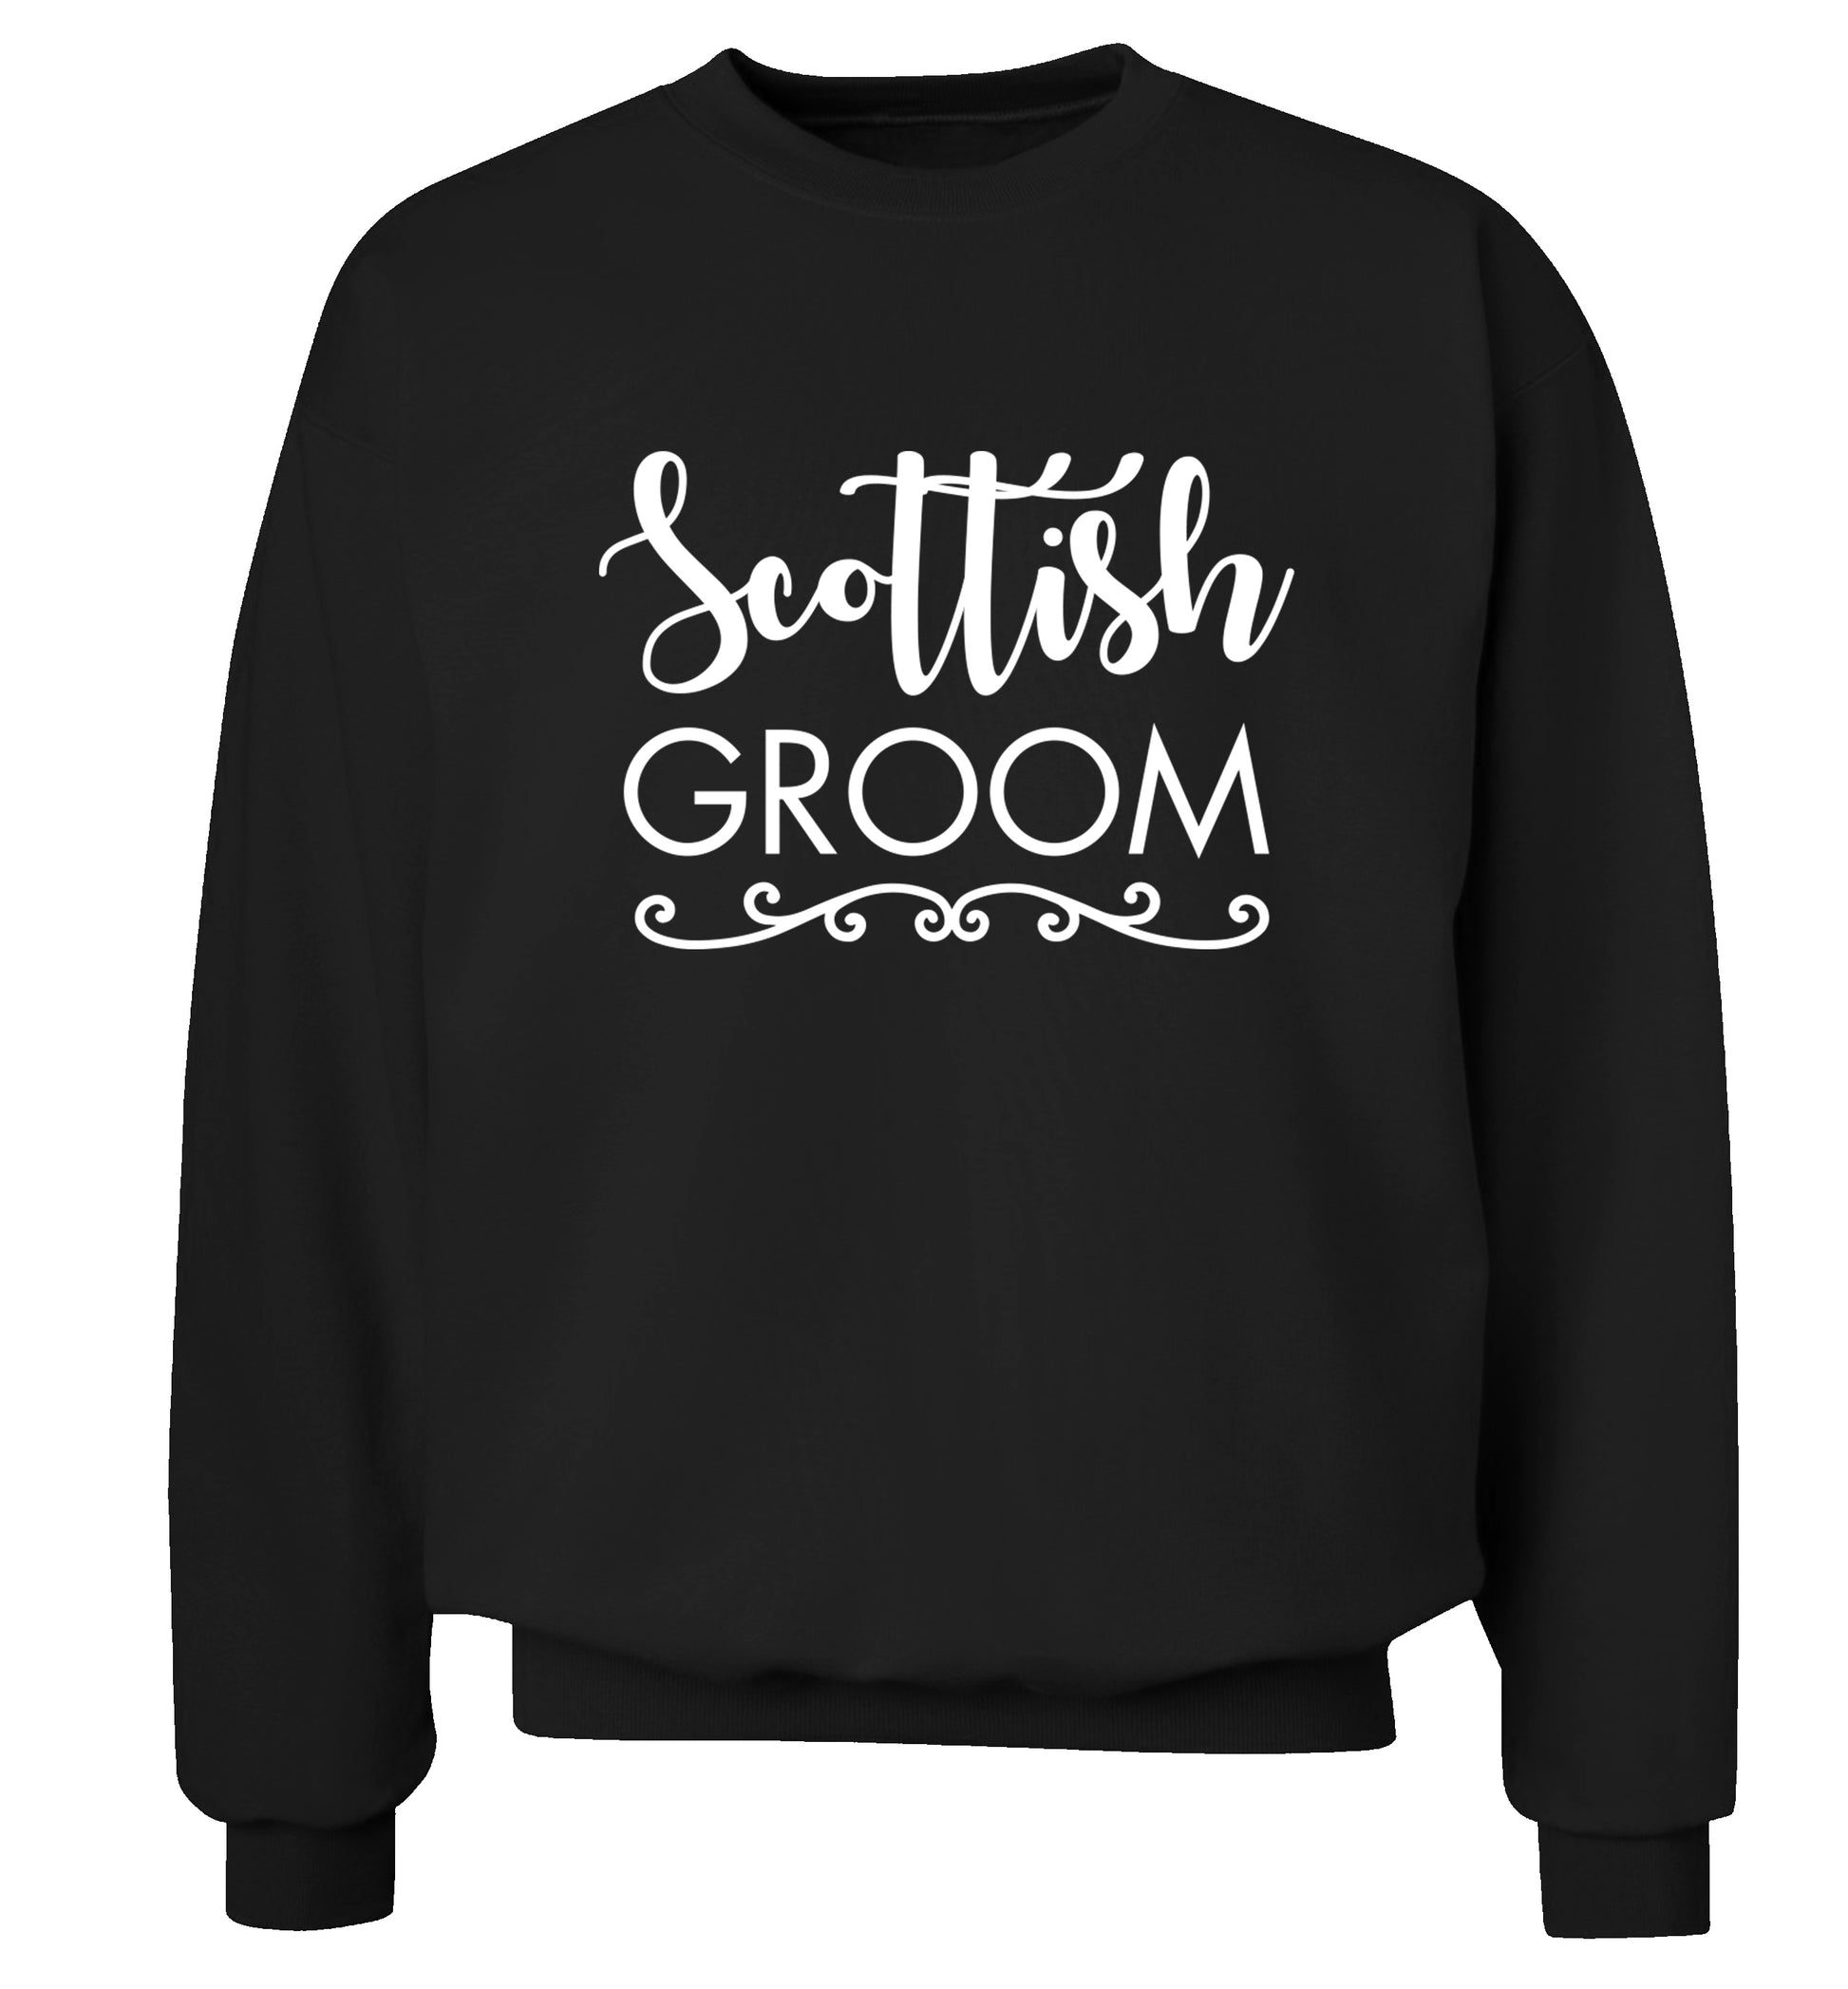 Scottish groom Adult's unisex black Sweater 2XL